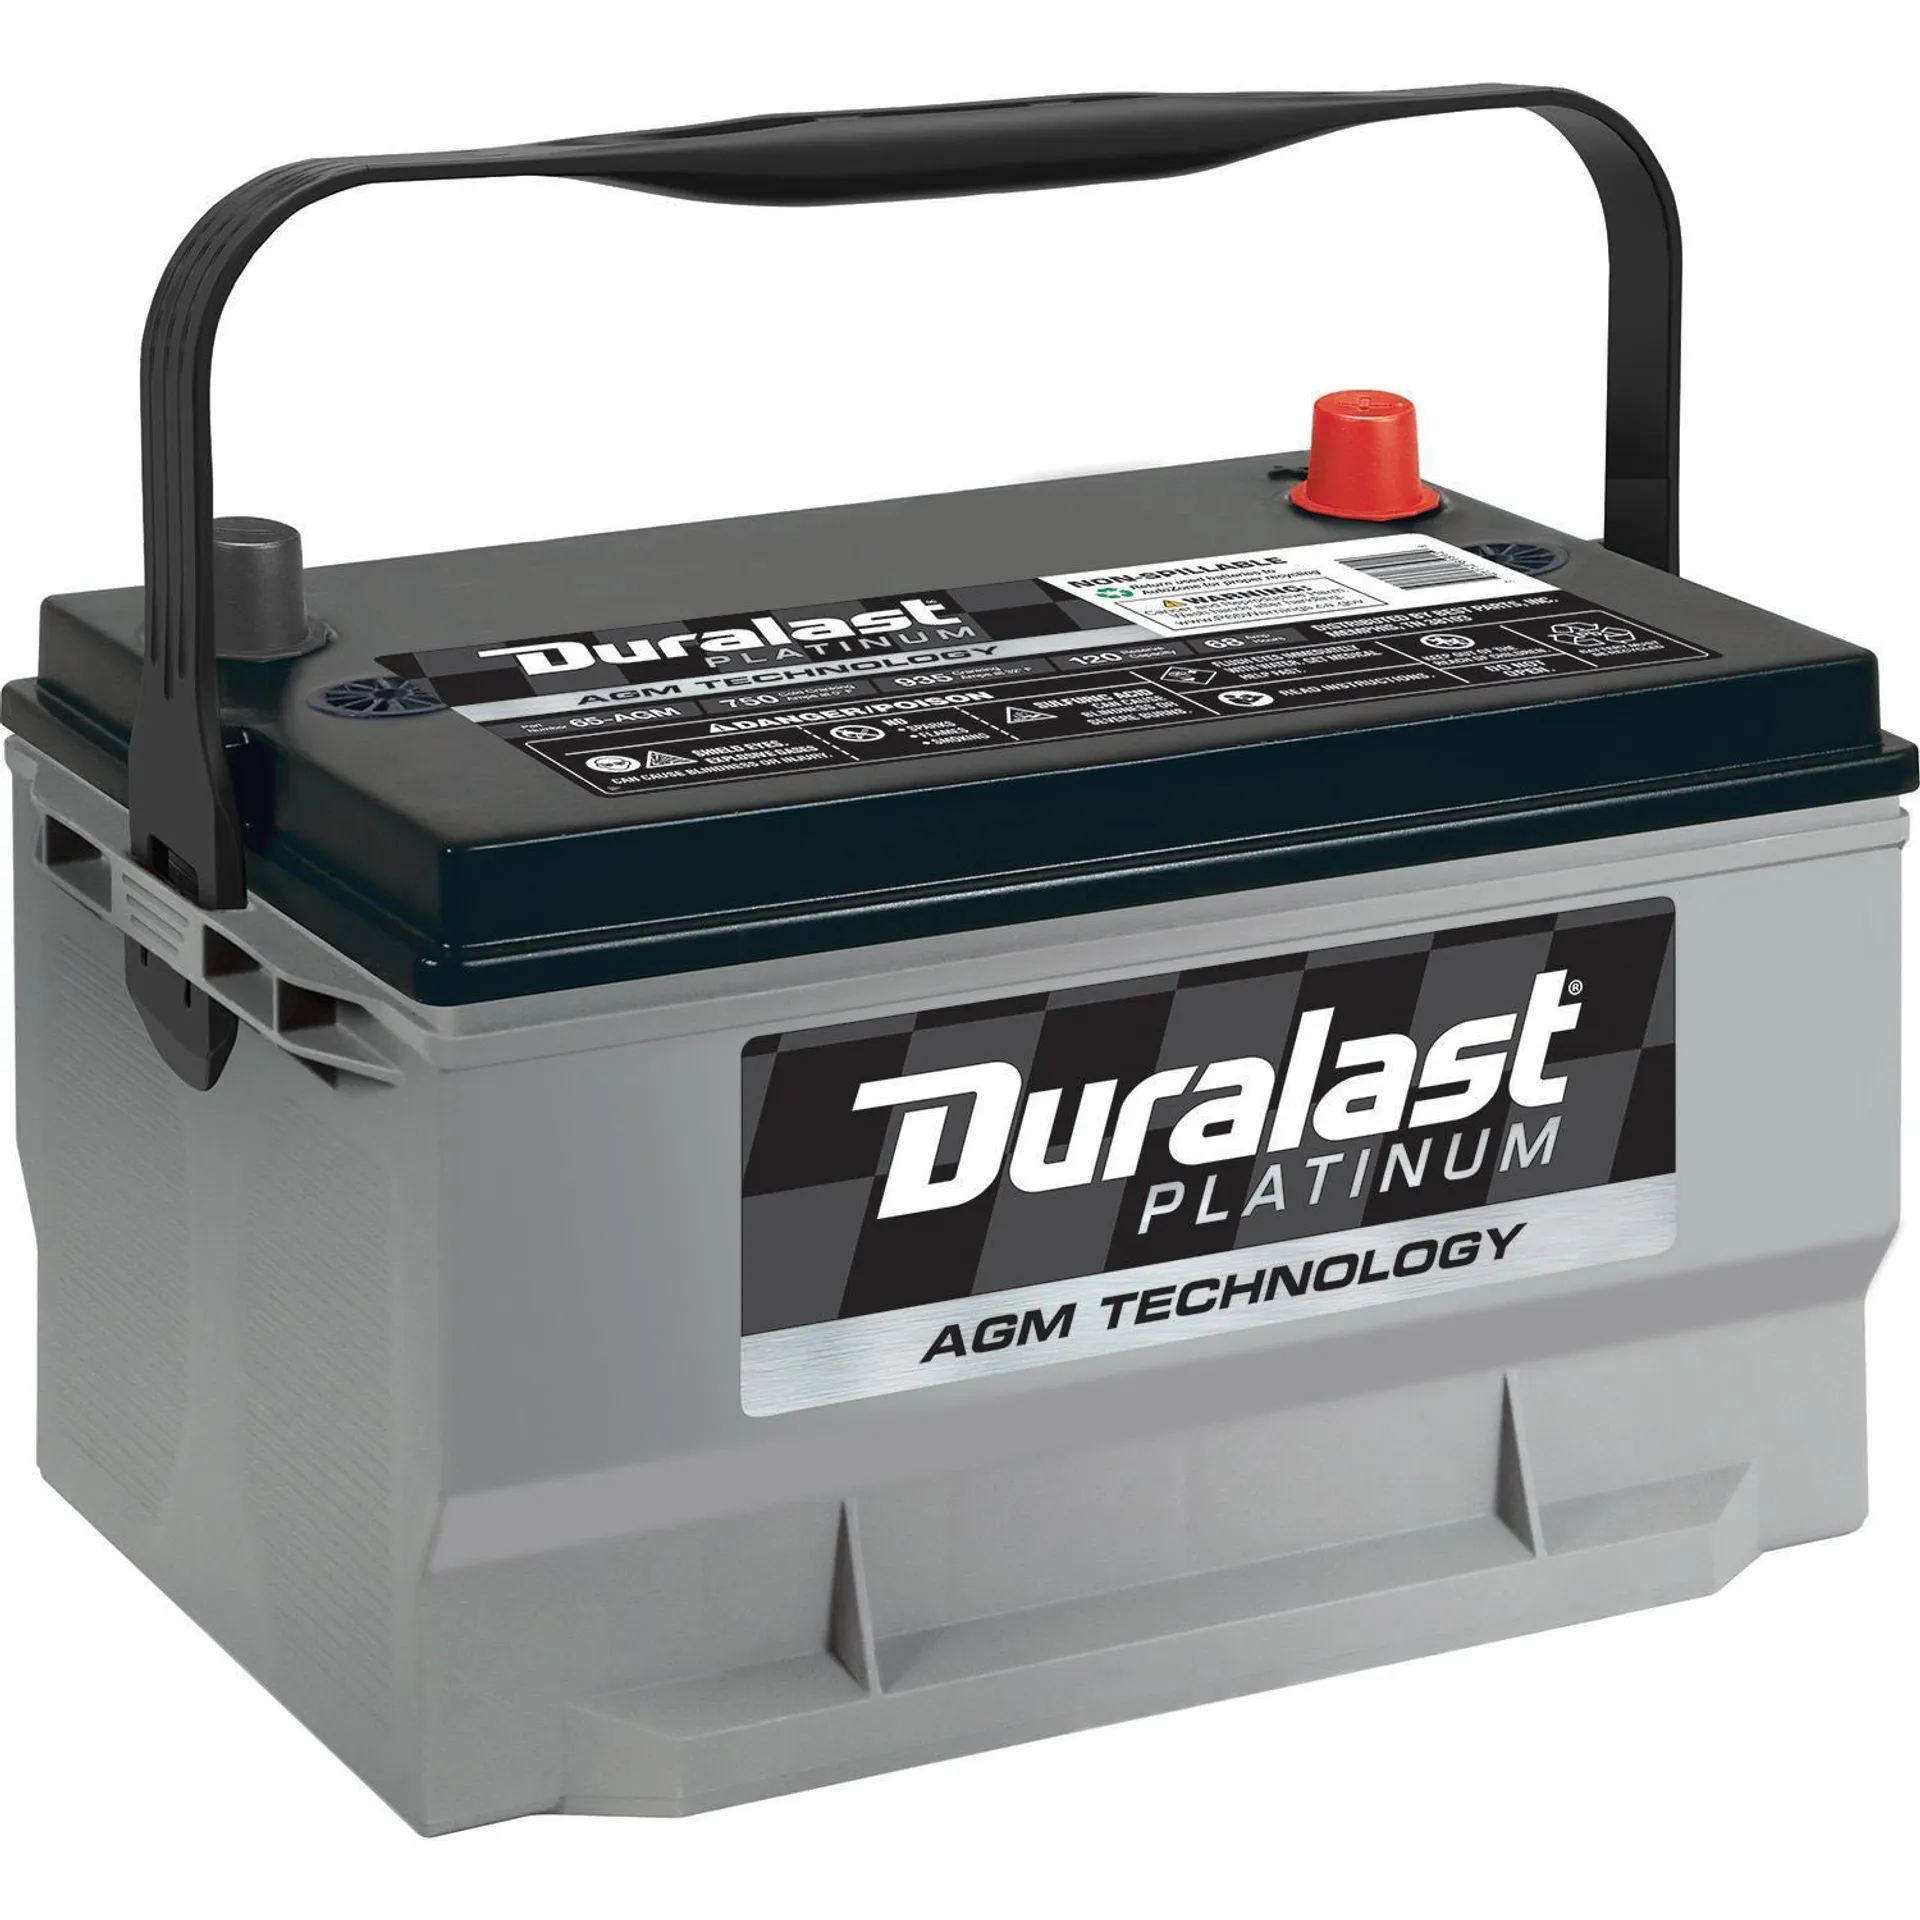 Duralast Platinum AGM Battery 65-AGM Group Size 65 750 CCA